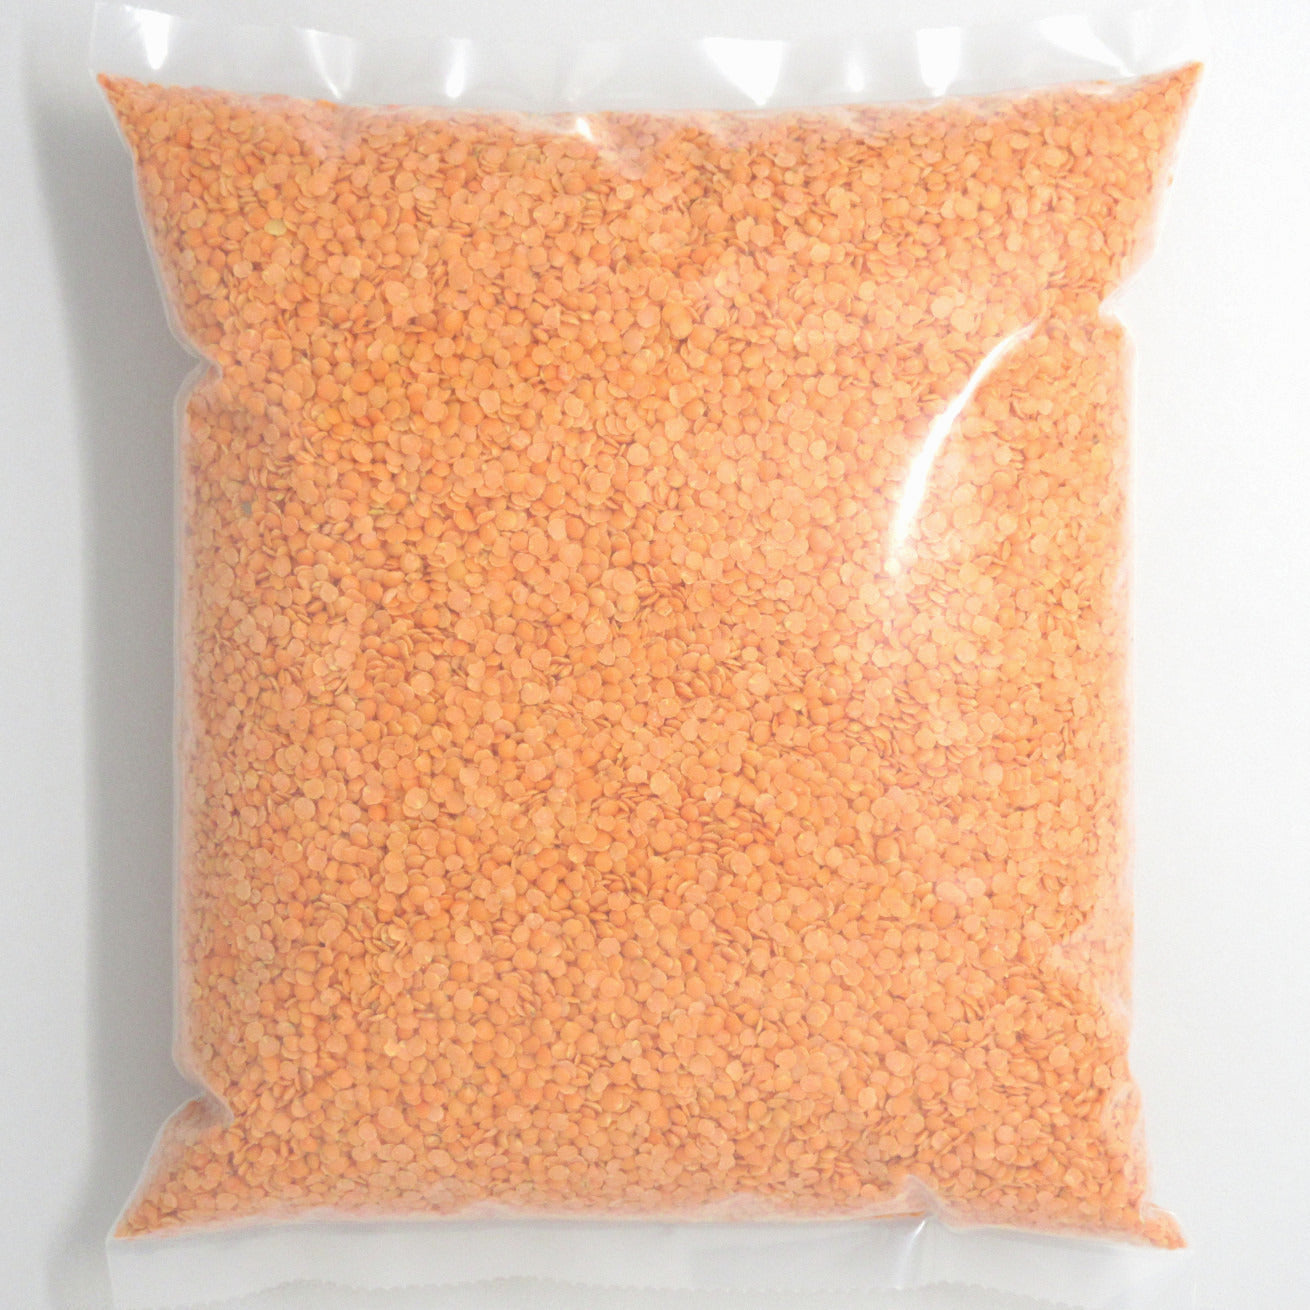 Flour Barrel product image - Red Lentils